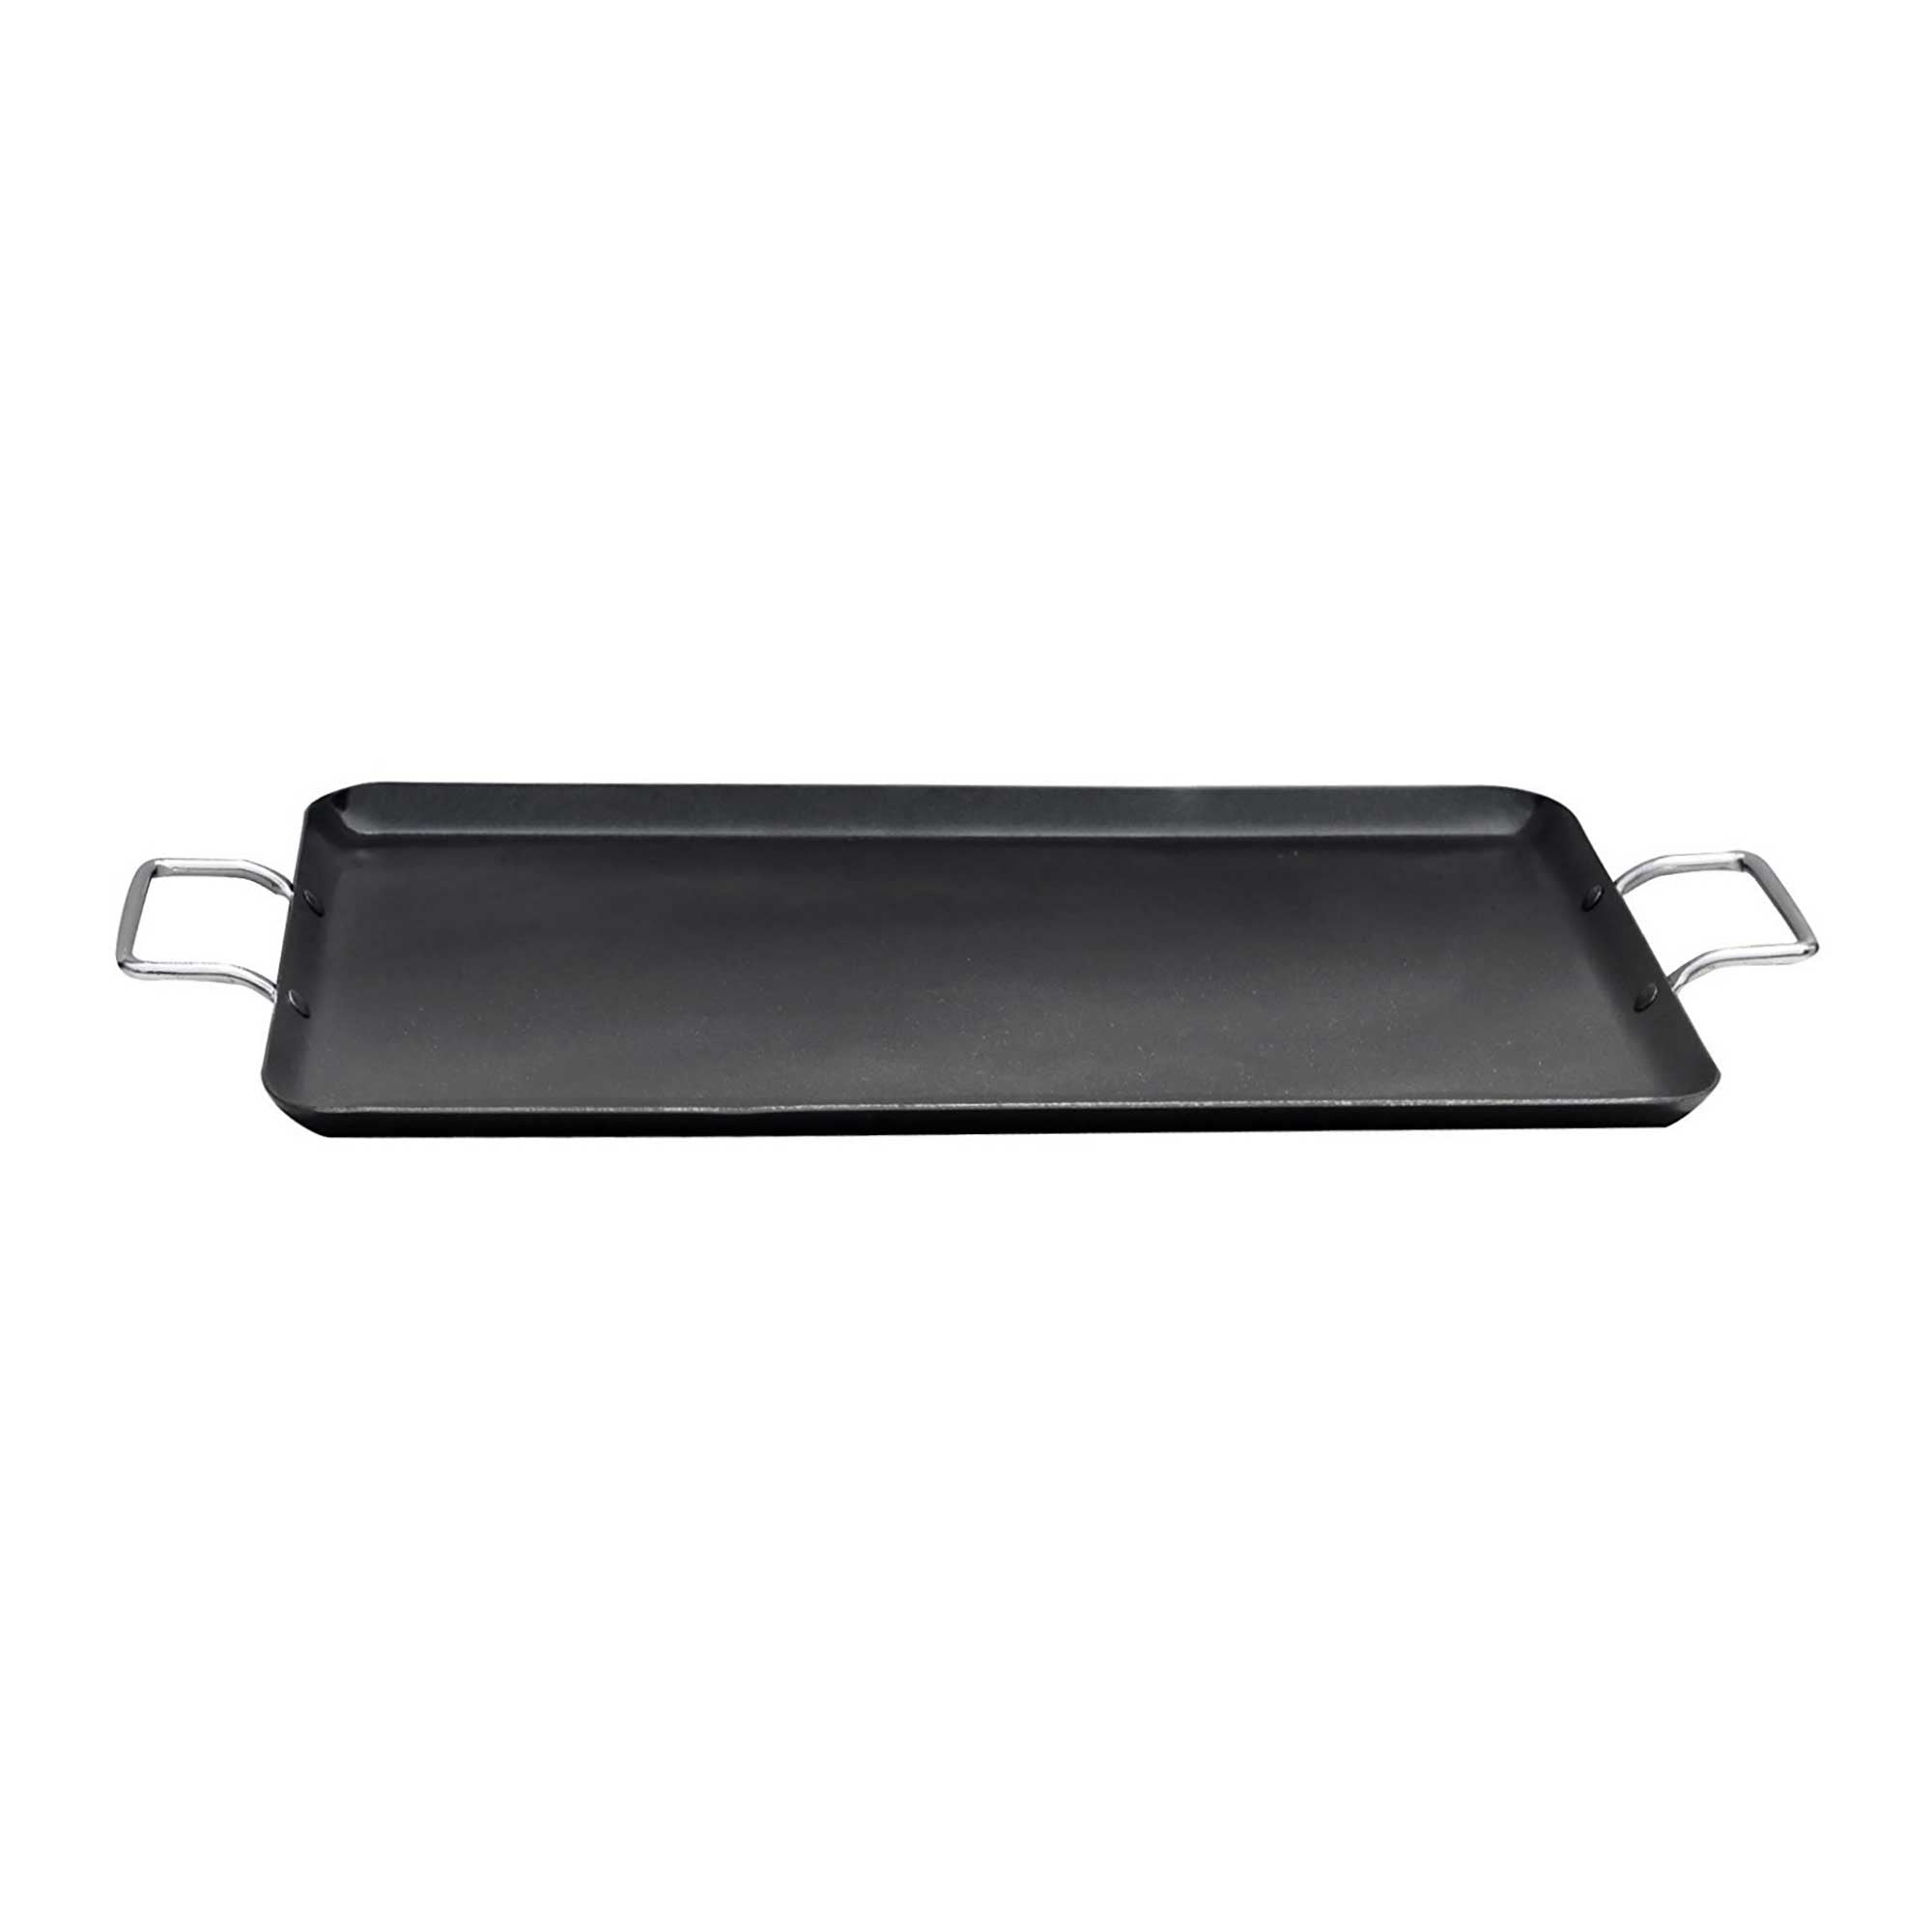 Brentwood BDG-2200 19” Non-Stick Aluminum Double Burner Griddle Pan, Black